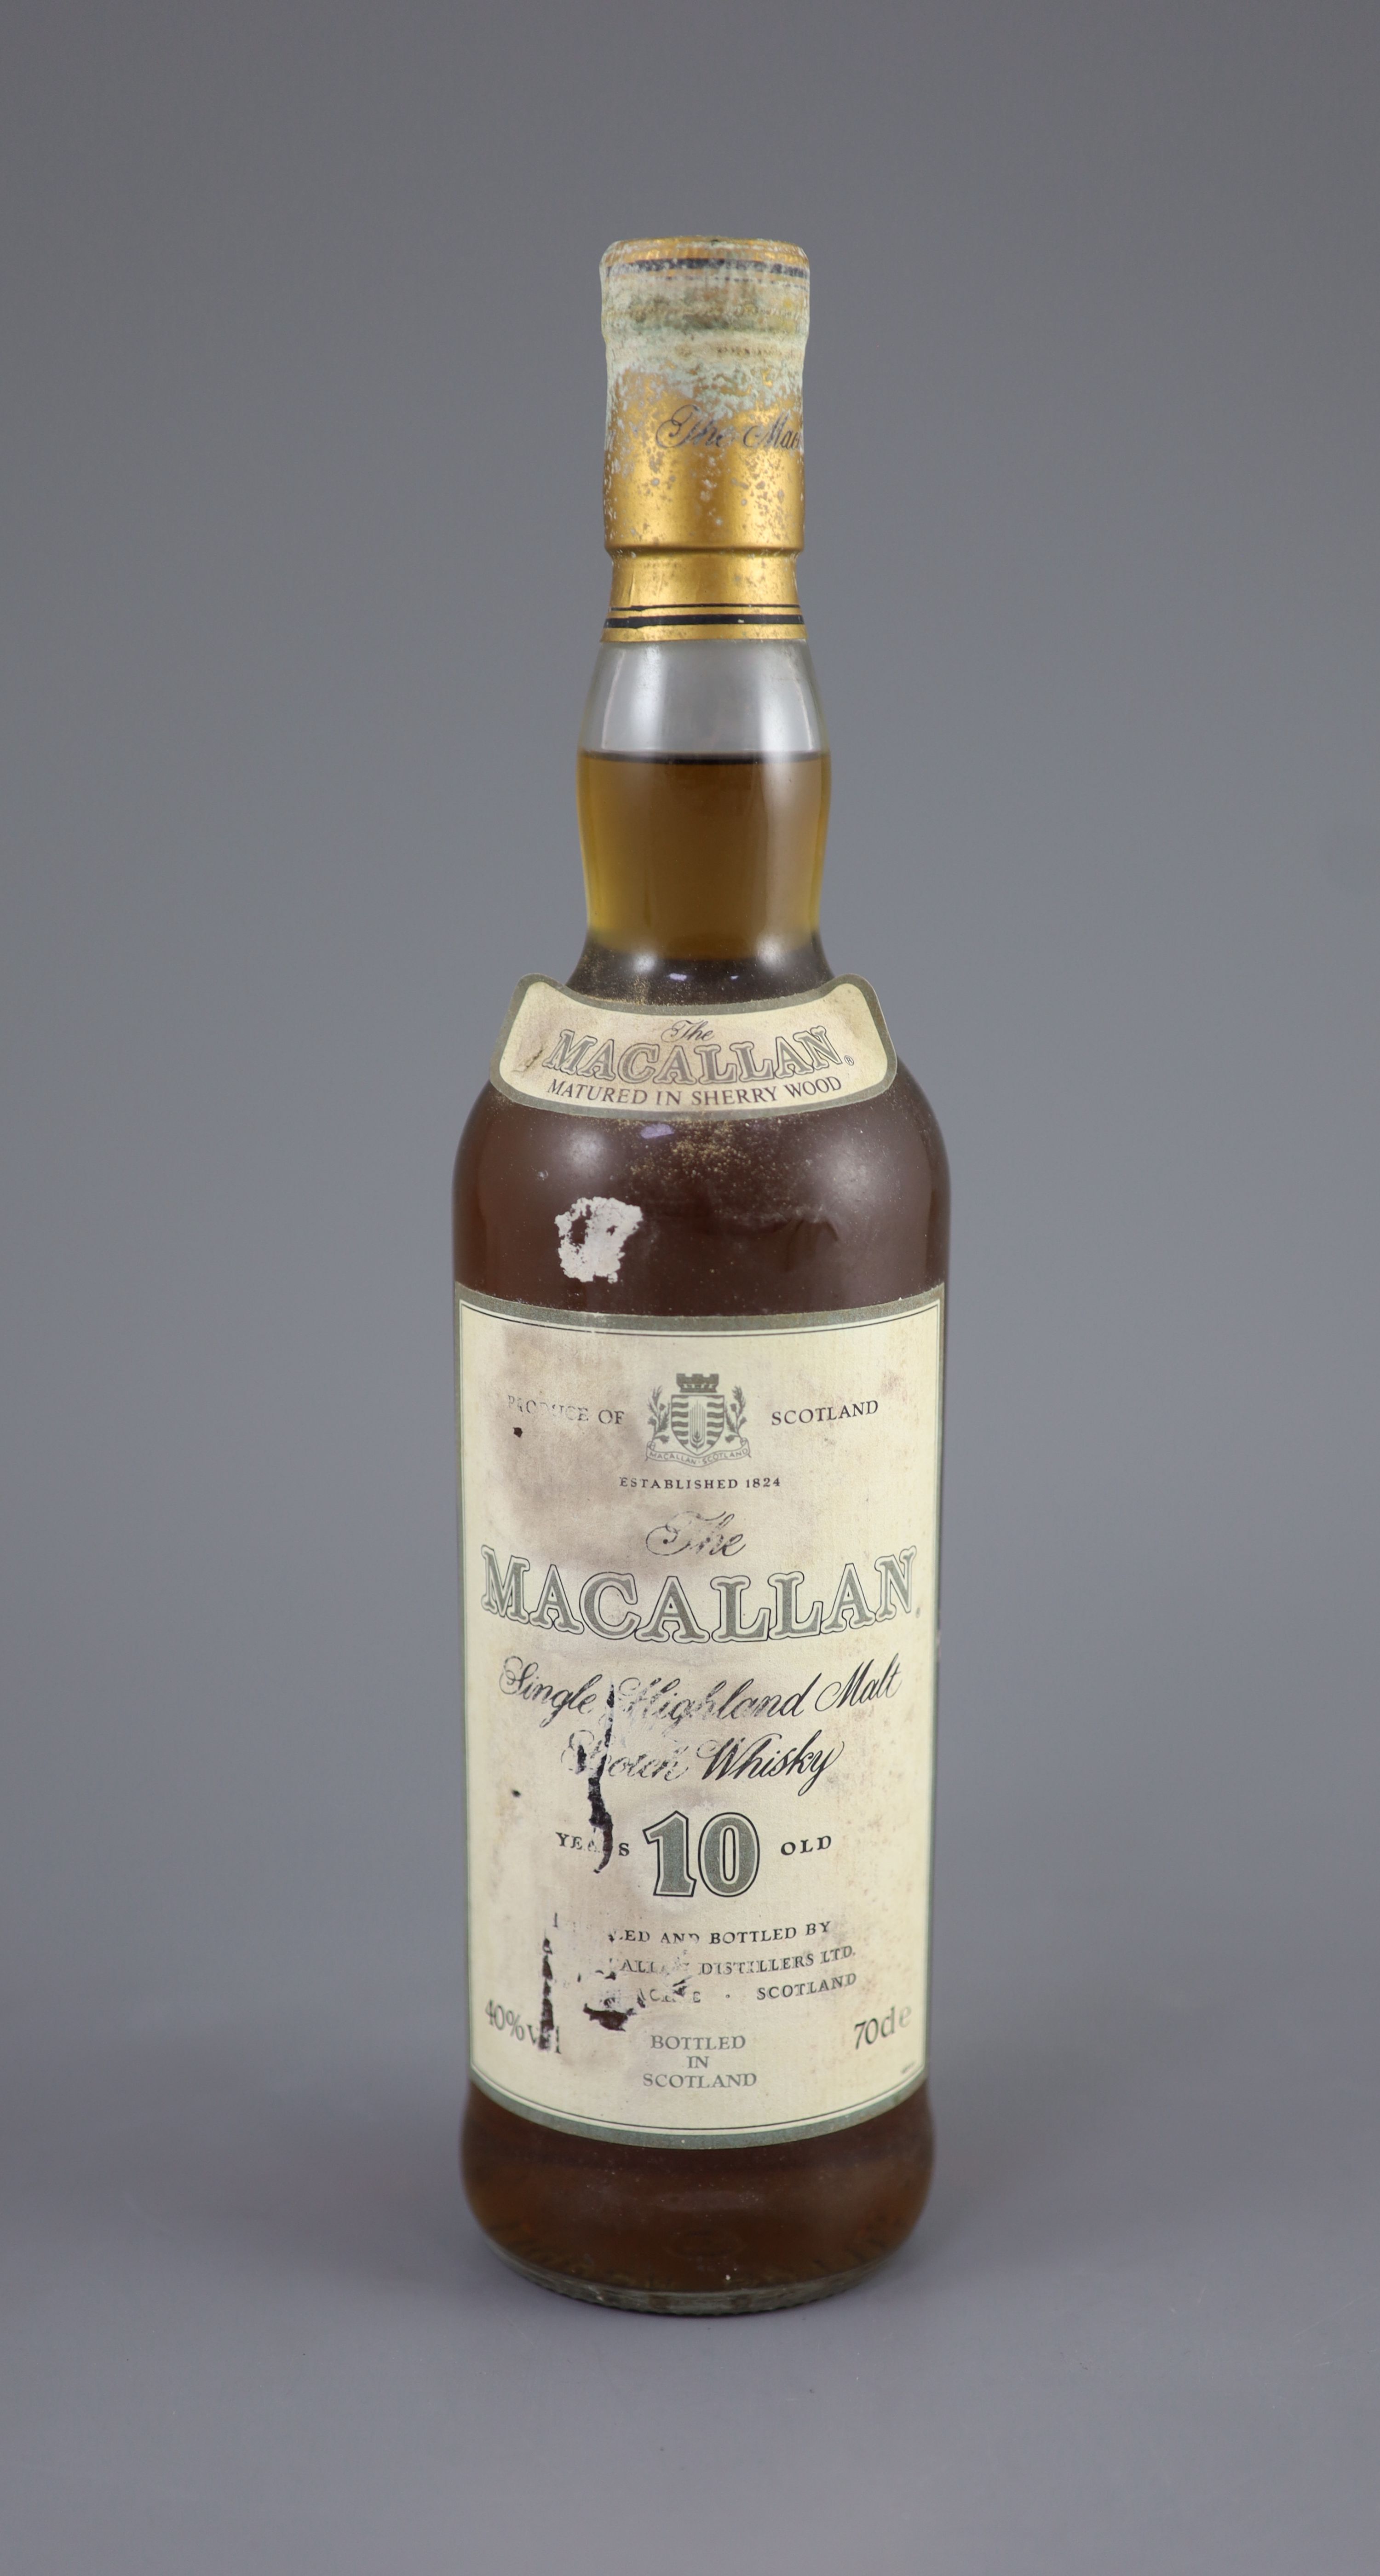 Macallan Single Highland Malt Scotch Whisky, 10 Years Old, 70cl